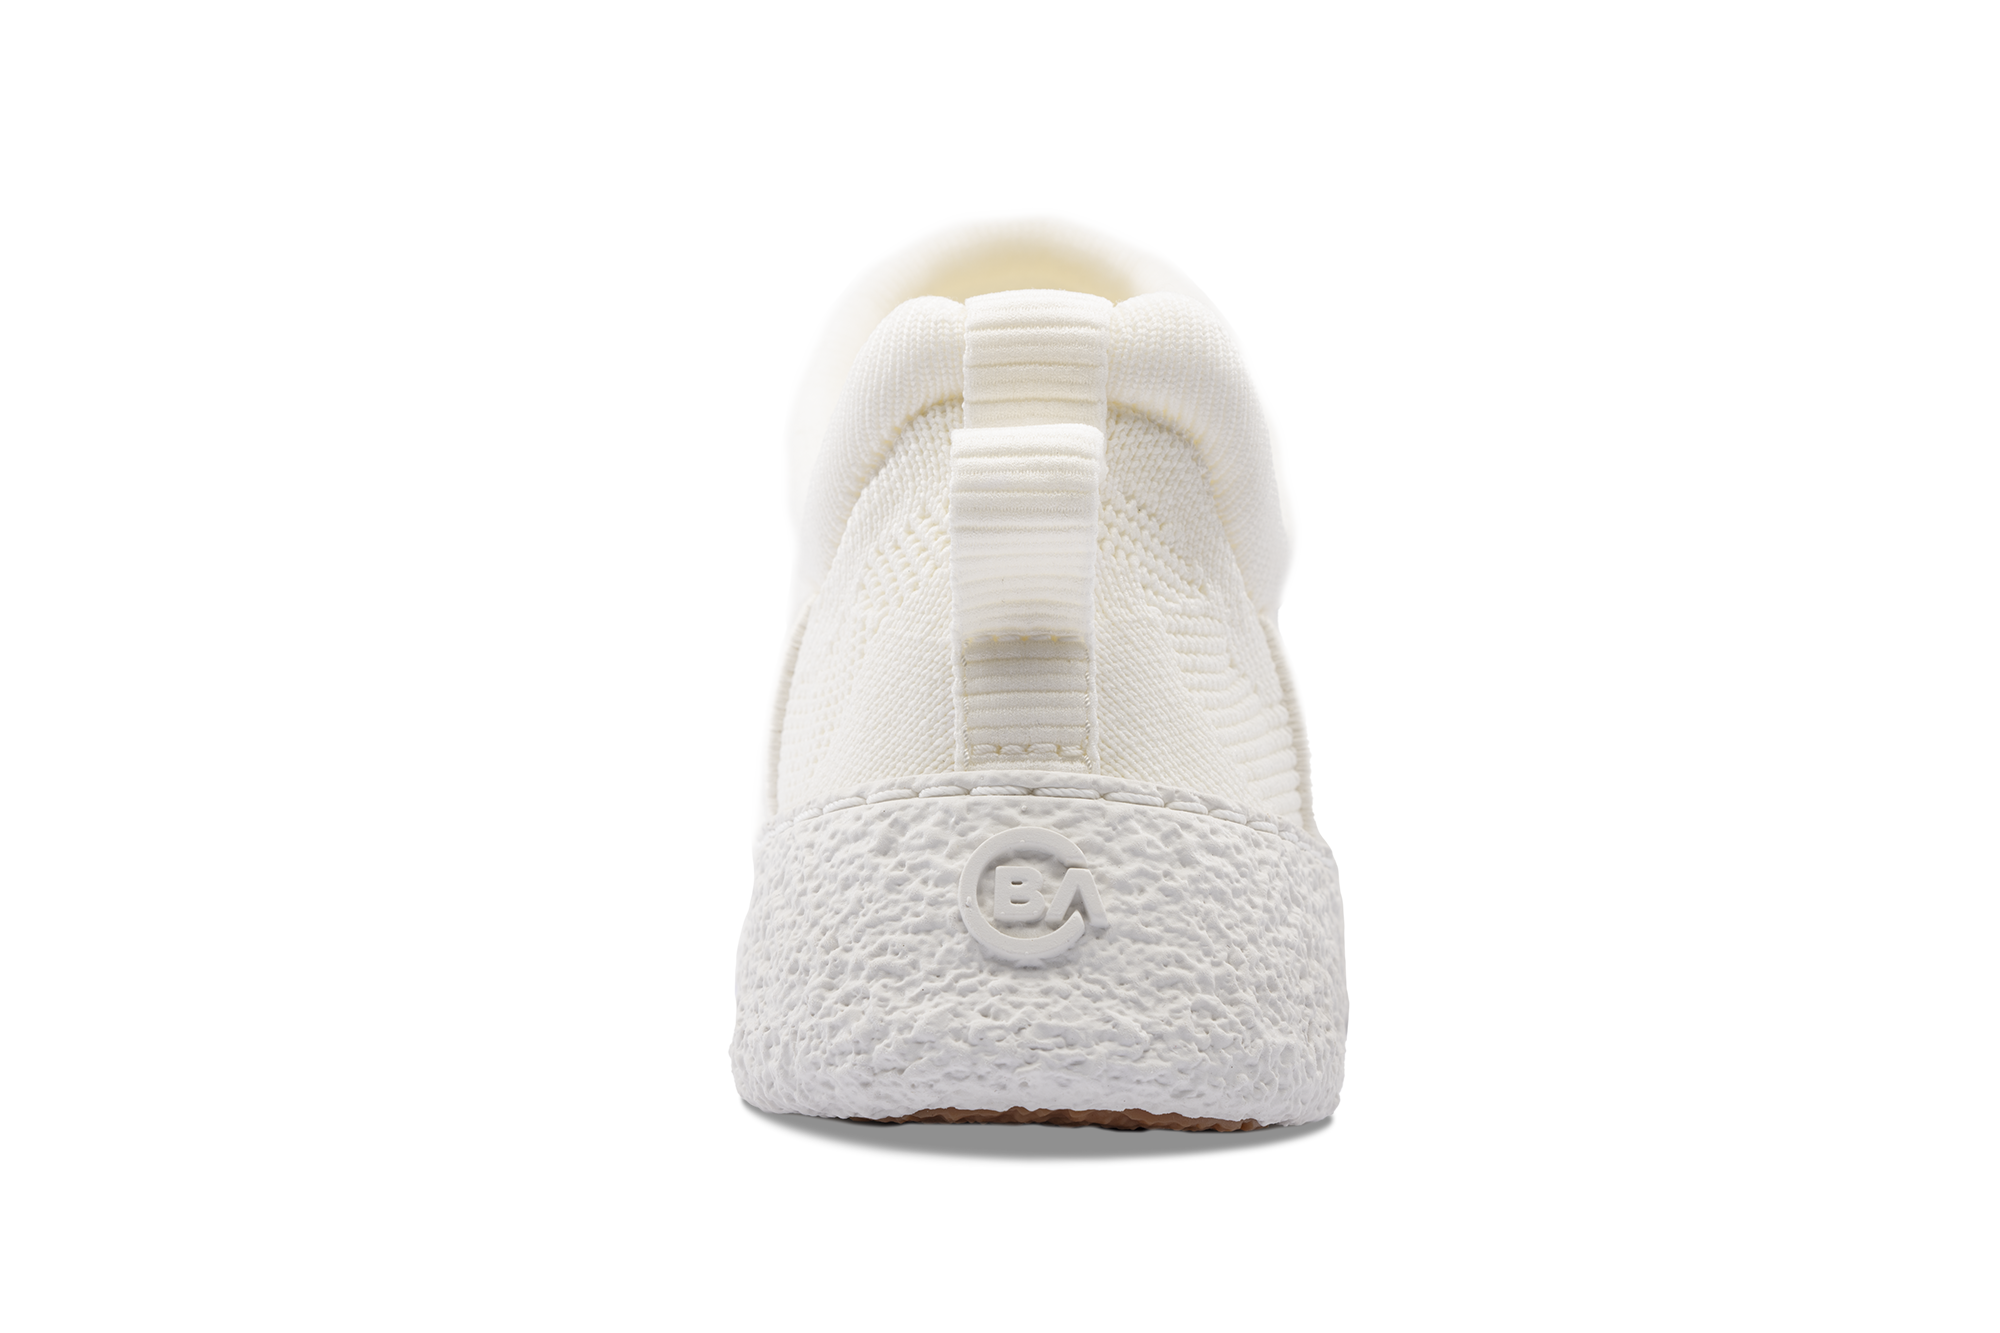 Full white Baliston Smart Shoe back view